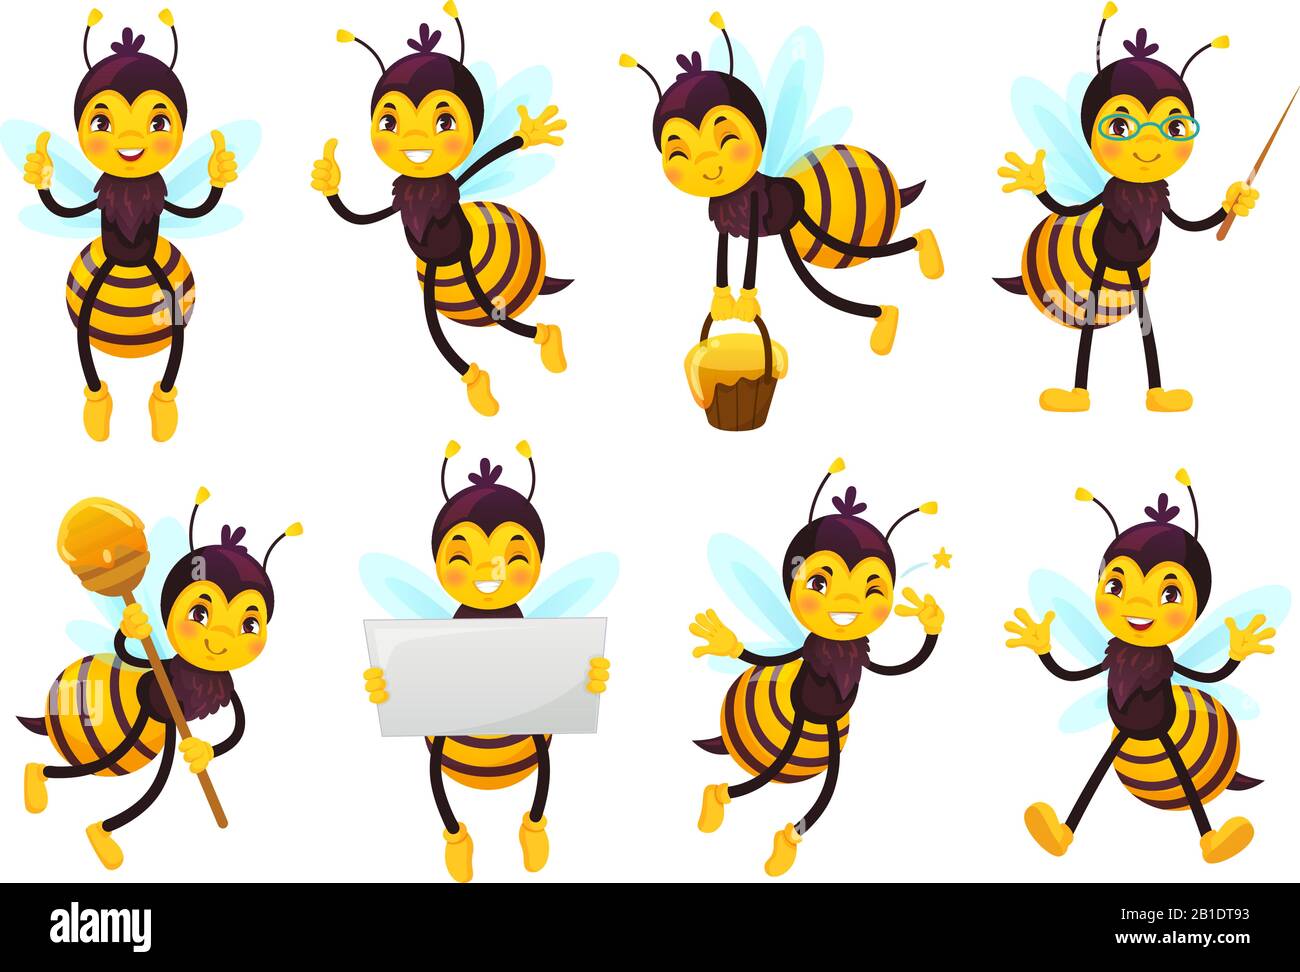 Cartoon bee mascot. Cute honeybee, flying bees and happy funny yellow bee character mascots vector illustration set Stock Vector